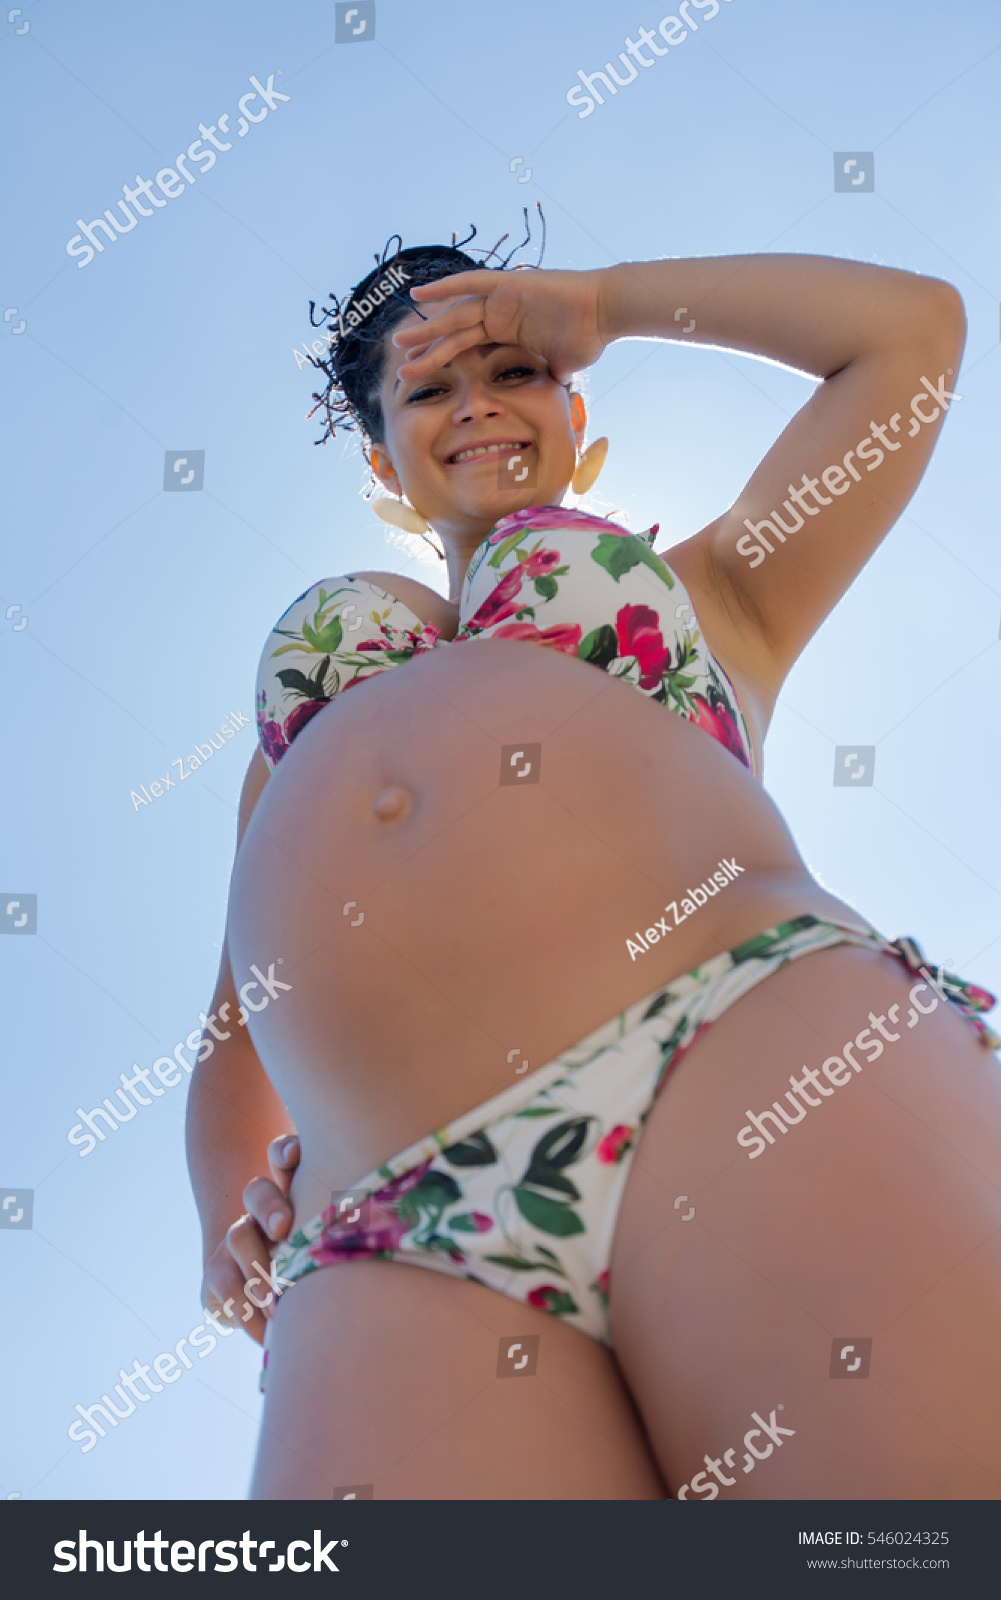 art covarrubias recommends pregnant ladies in bikinis pic